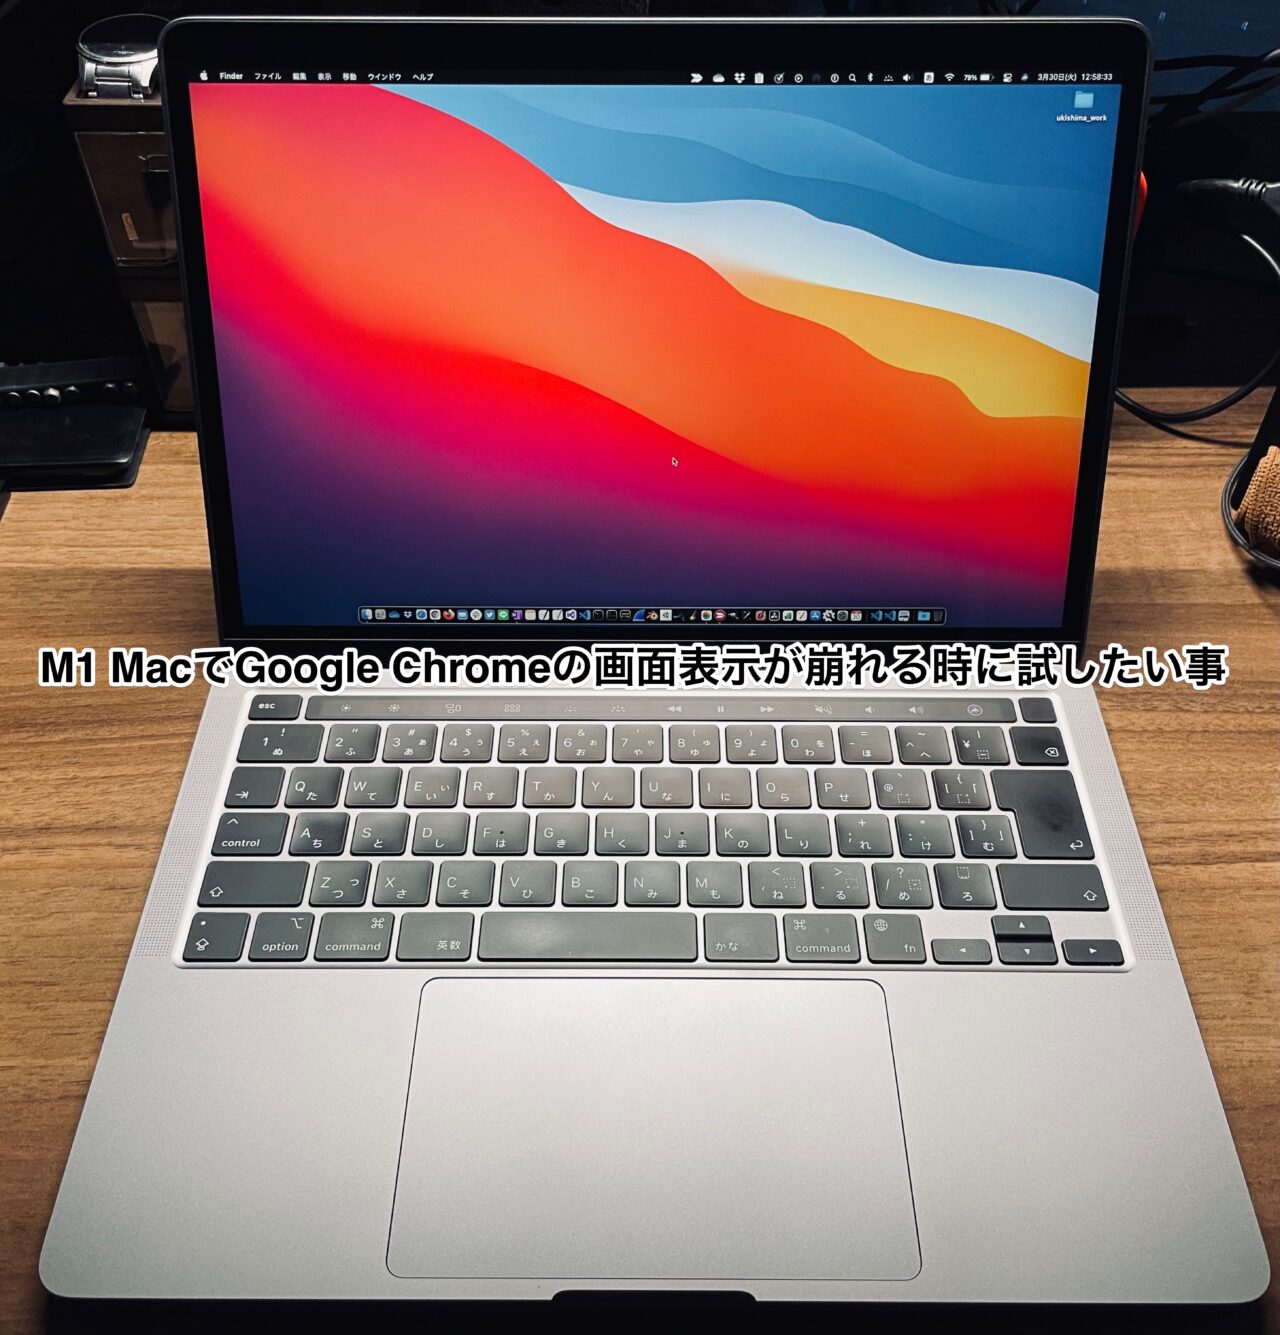 chrome on macbook m1